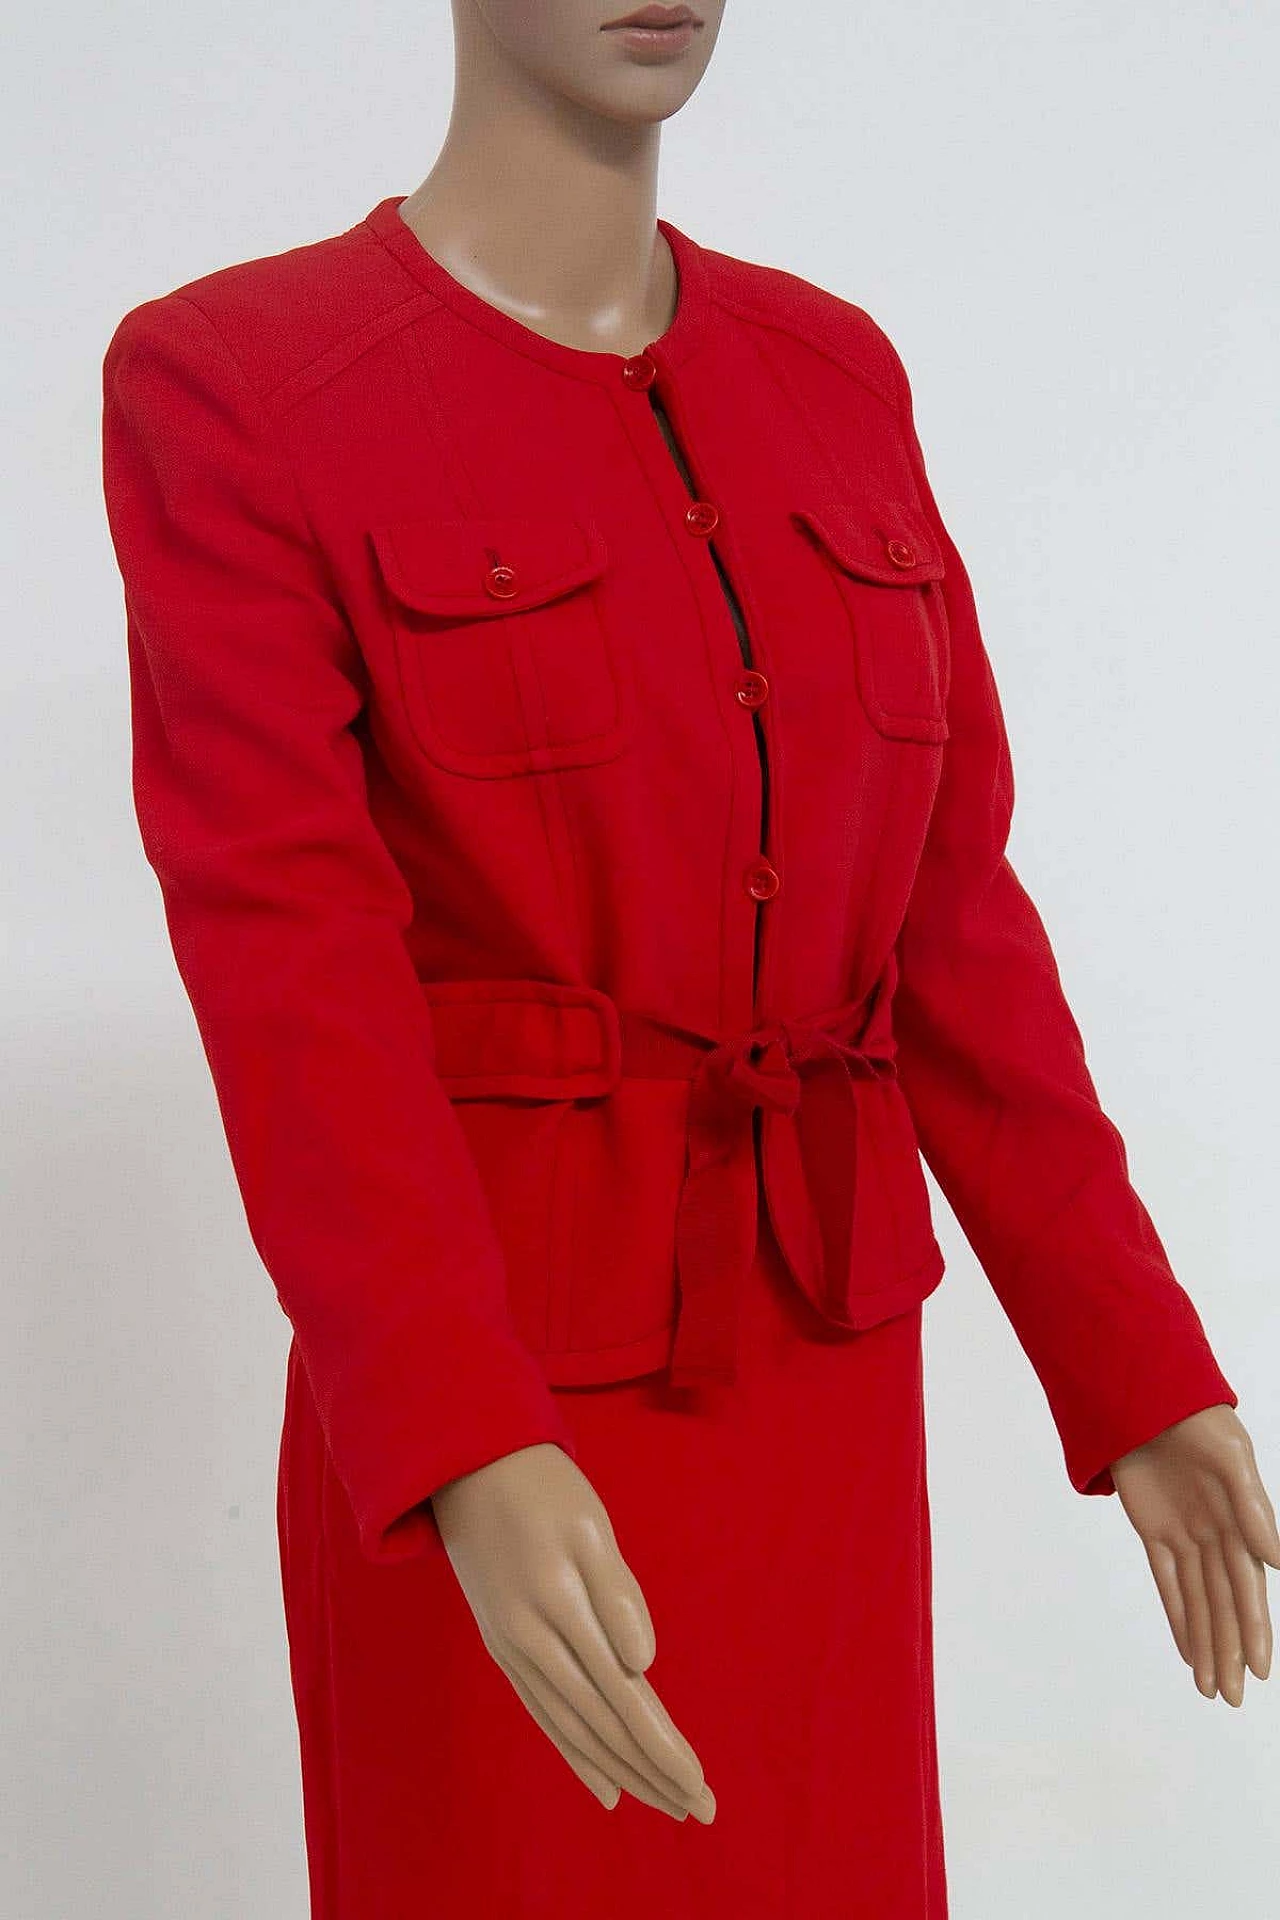 Red sheath dress by Valentino Garavani, 1990s 3